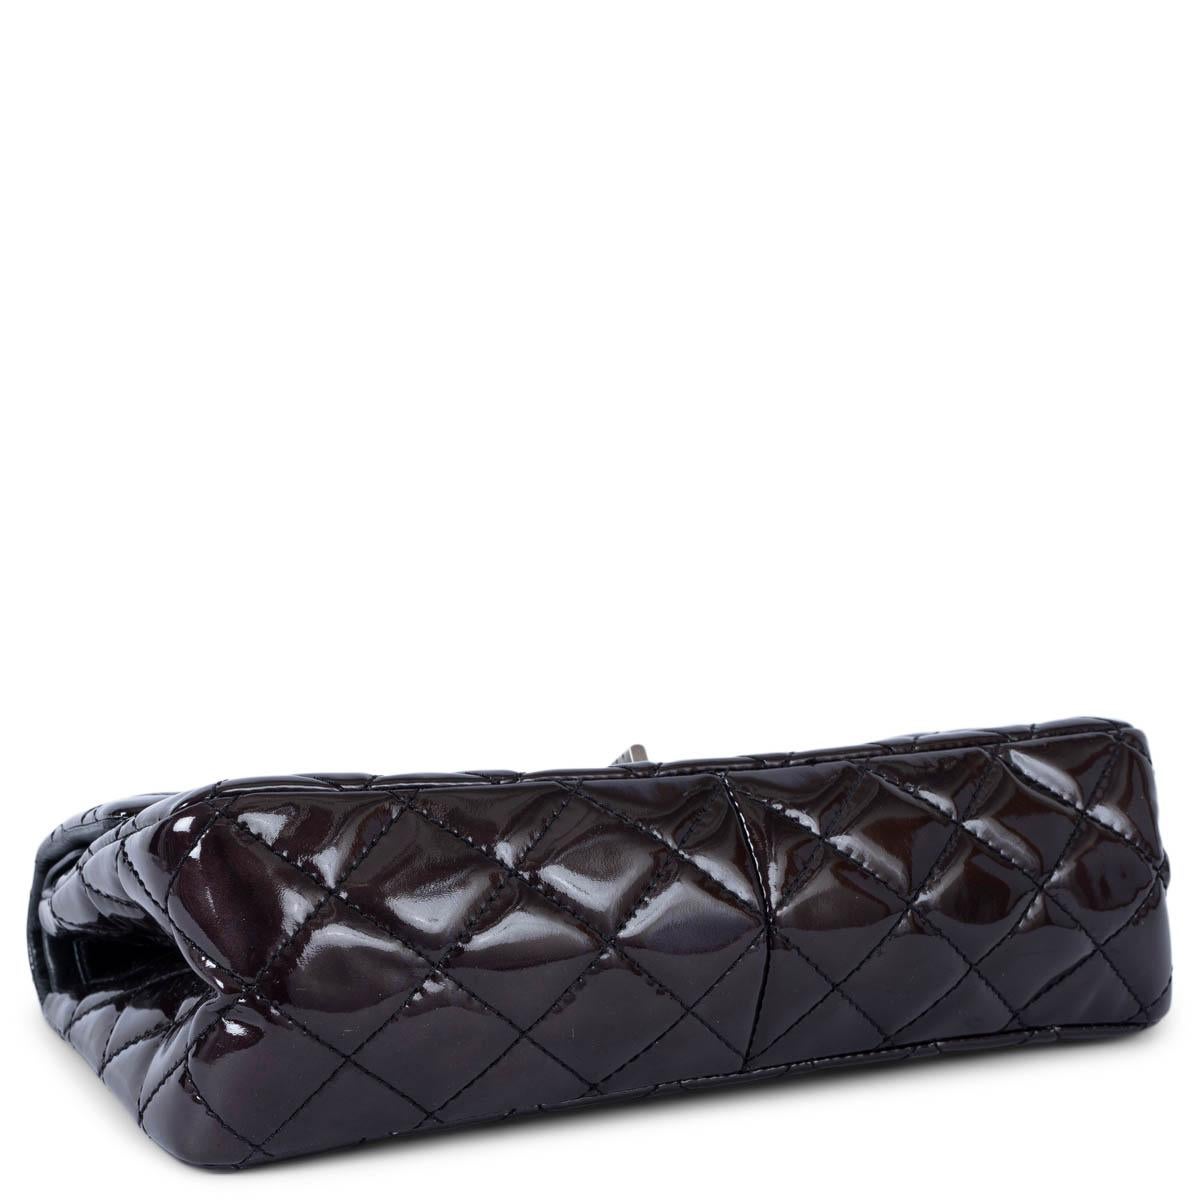 CHANEL dark brown patent leather 2.55 REISSUE 226 LARGE Shoulder Bag For Sale 1